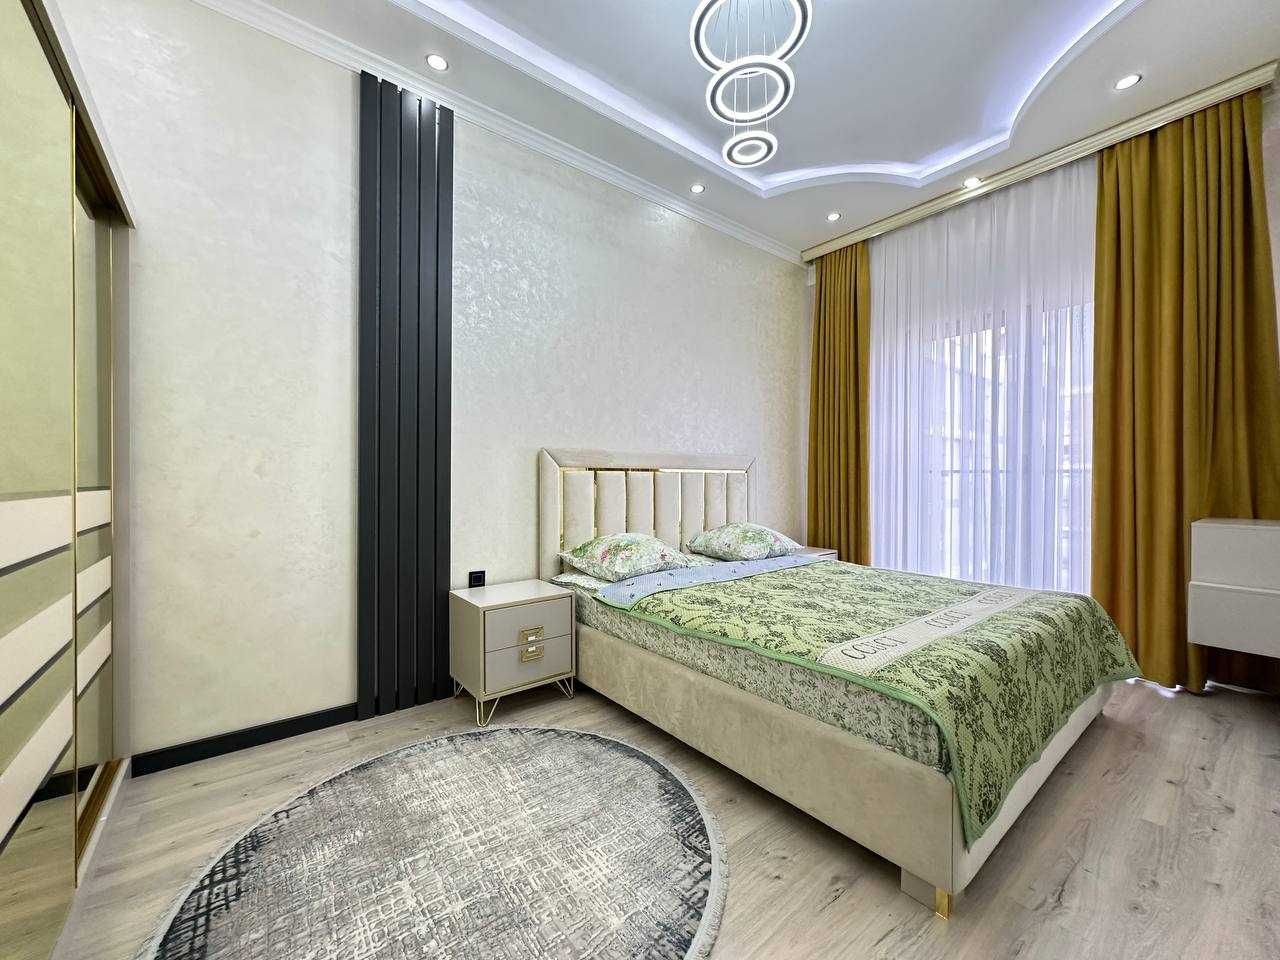 Tashkent City ЖК "Gradens residence" 4/7/8, ЕВРОЛЮКС,83м2, есть балкон